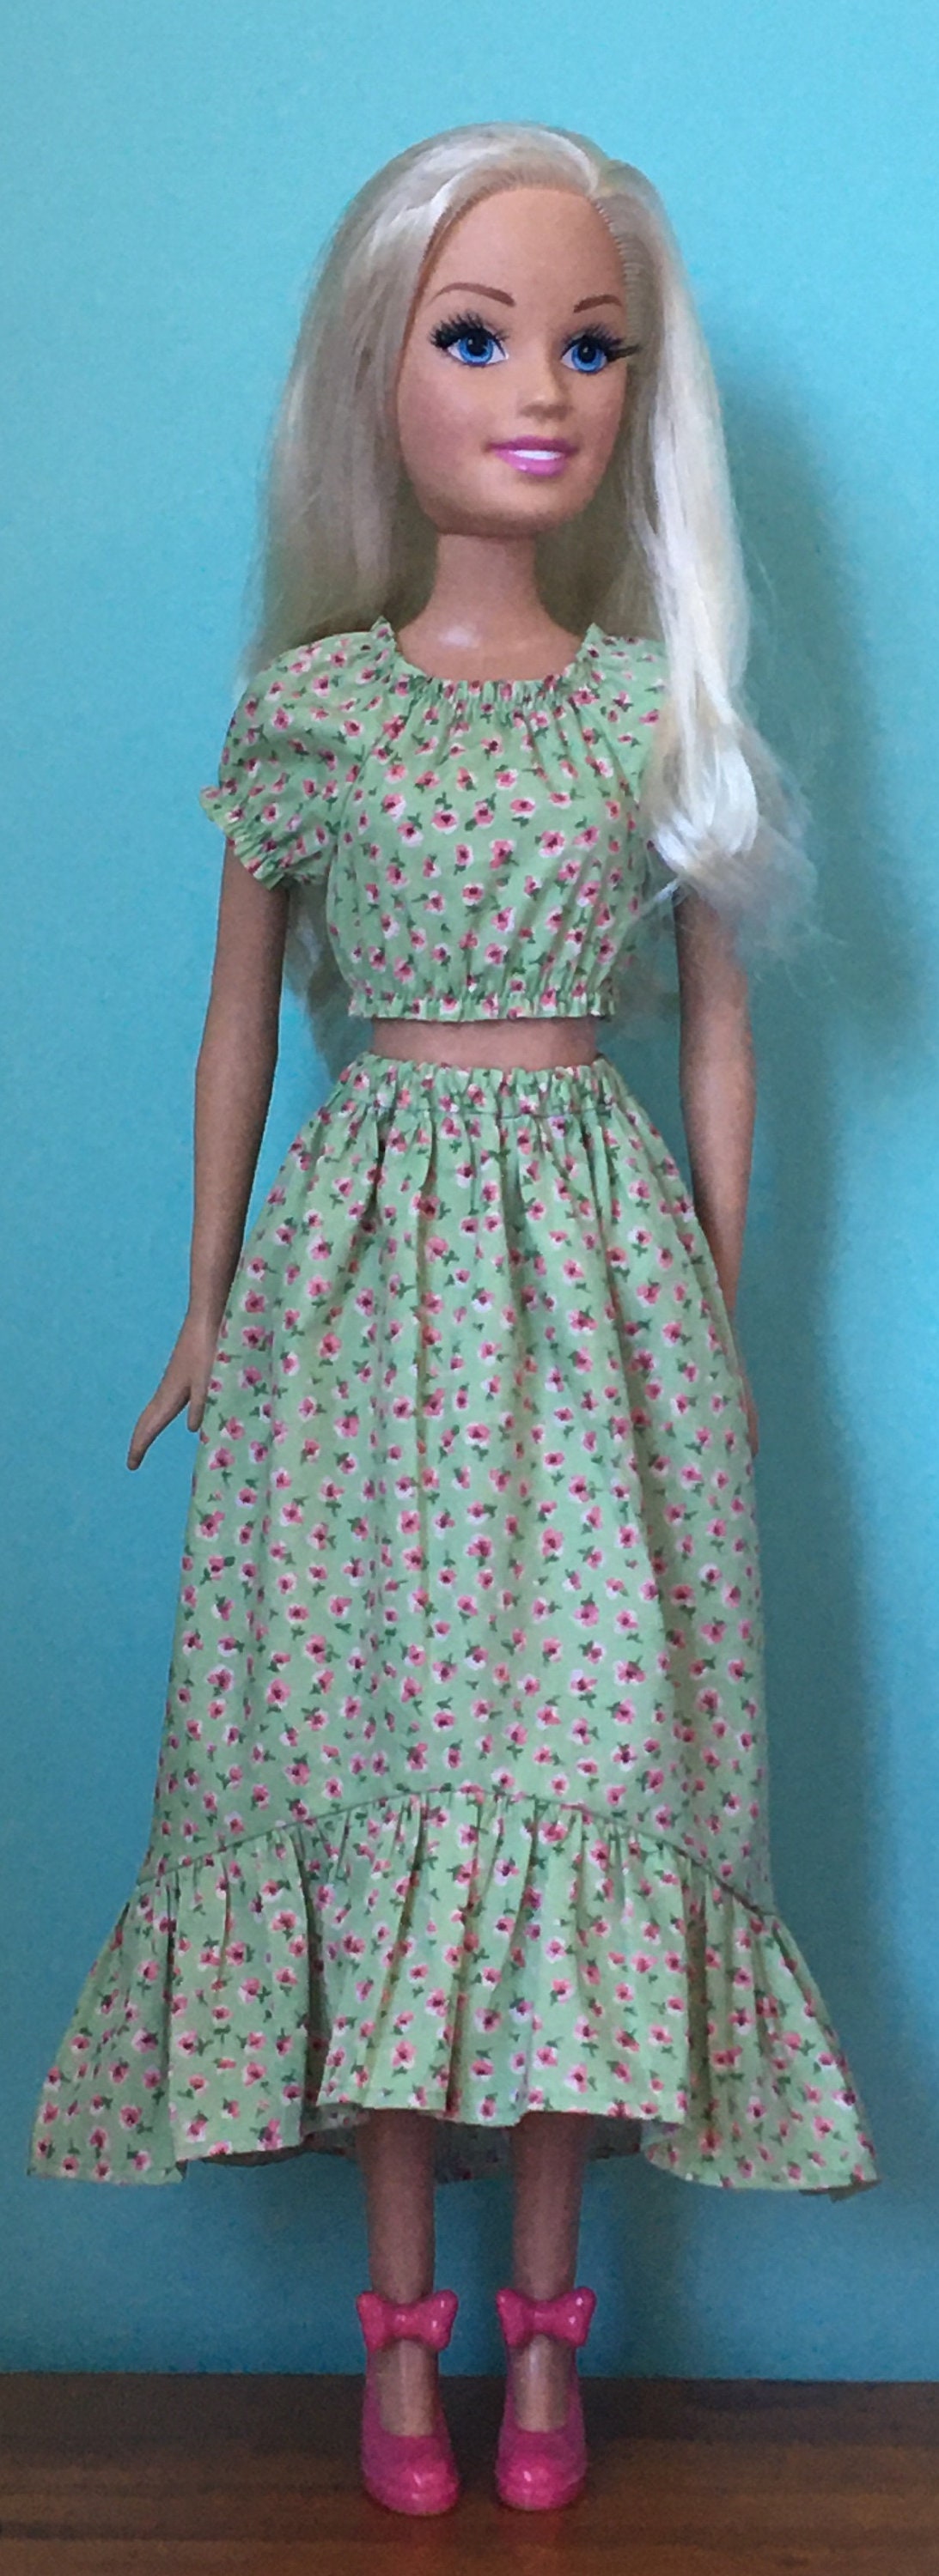 Summer Styles Pattern for 28in Best Fashion Friend Barbie Doll - Etsy